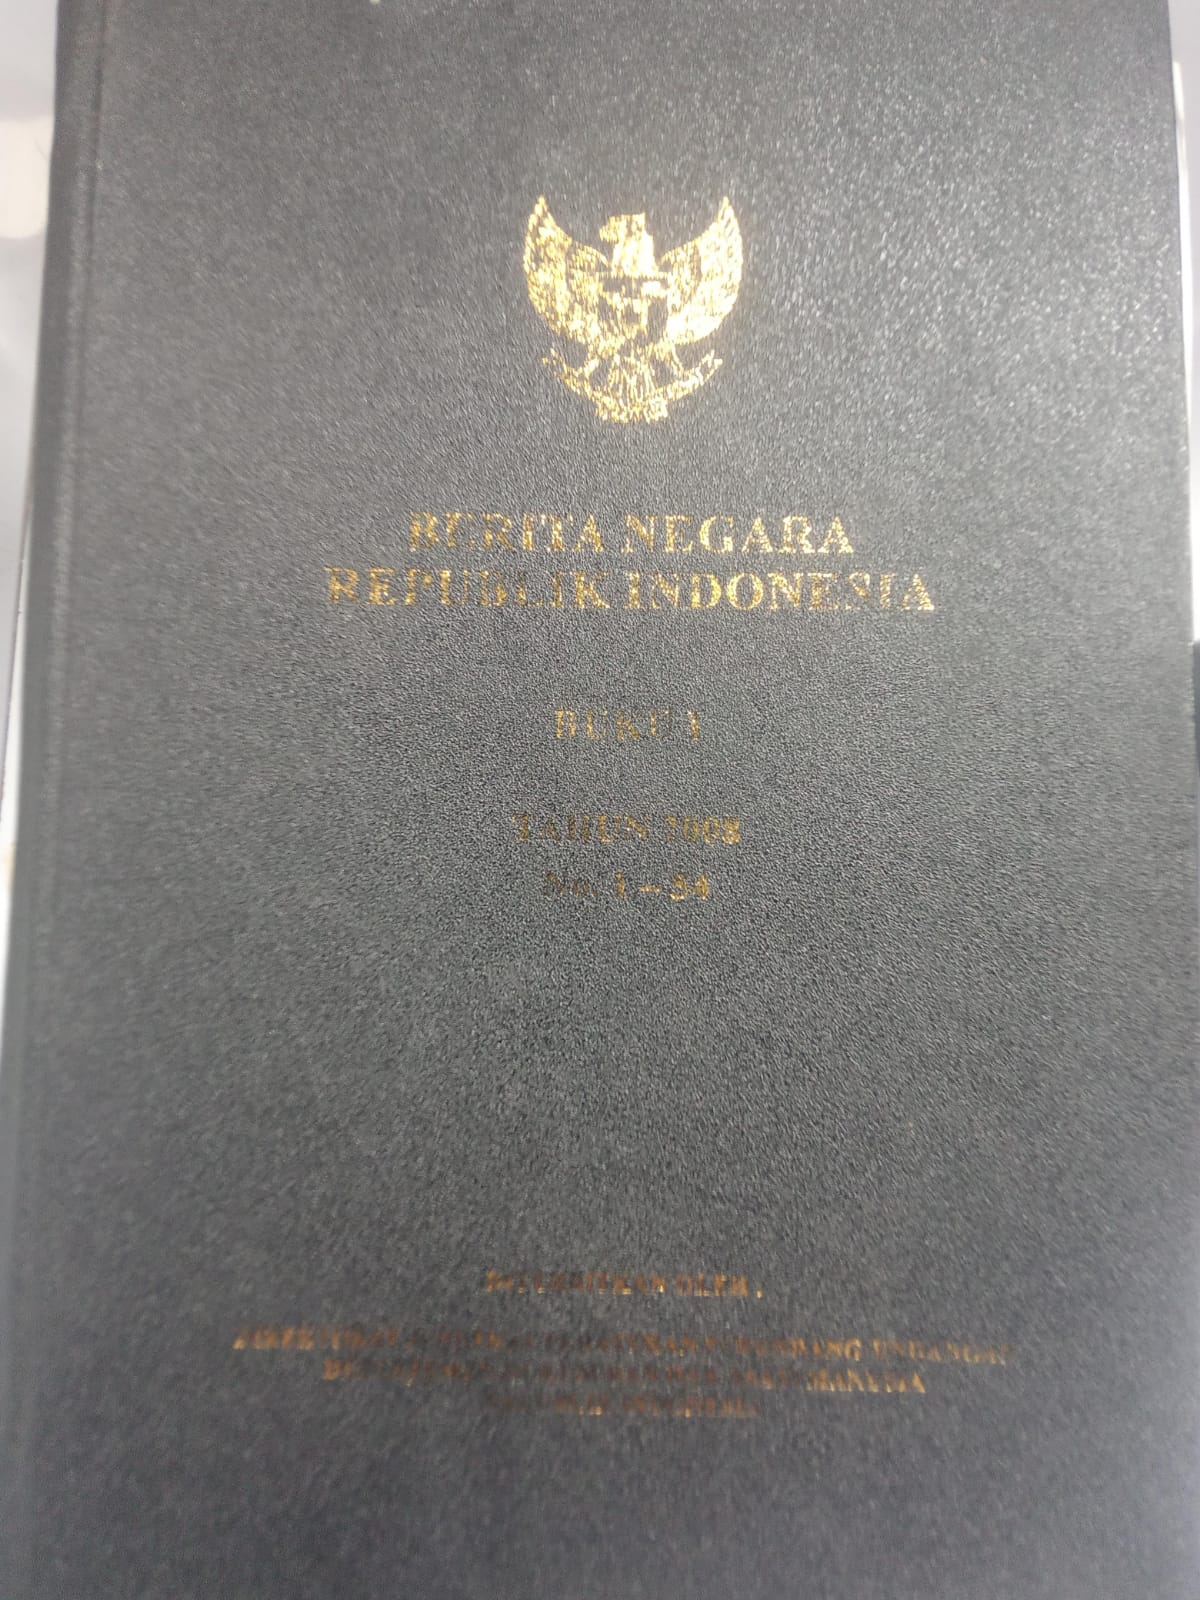 Berita Negara Republik Indonesia Buku l Tahun 2008 No. 1-54 